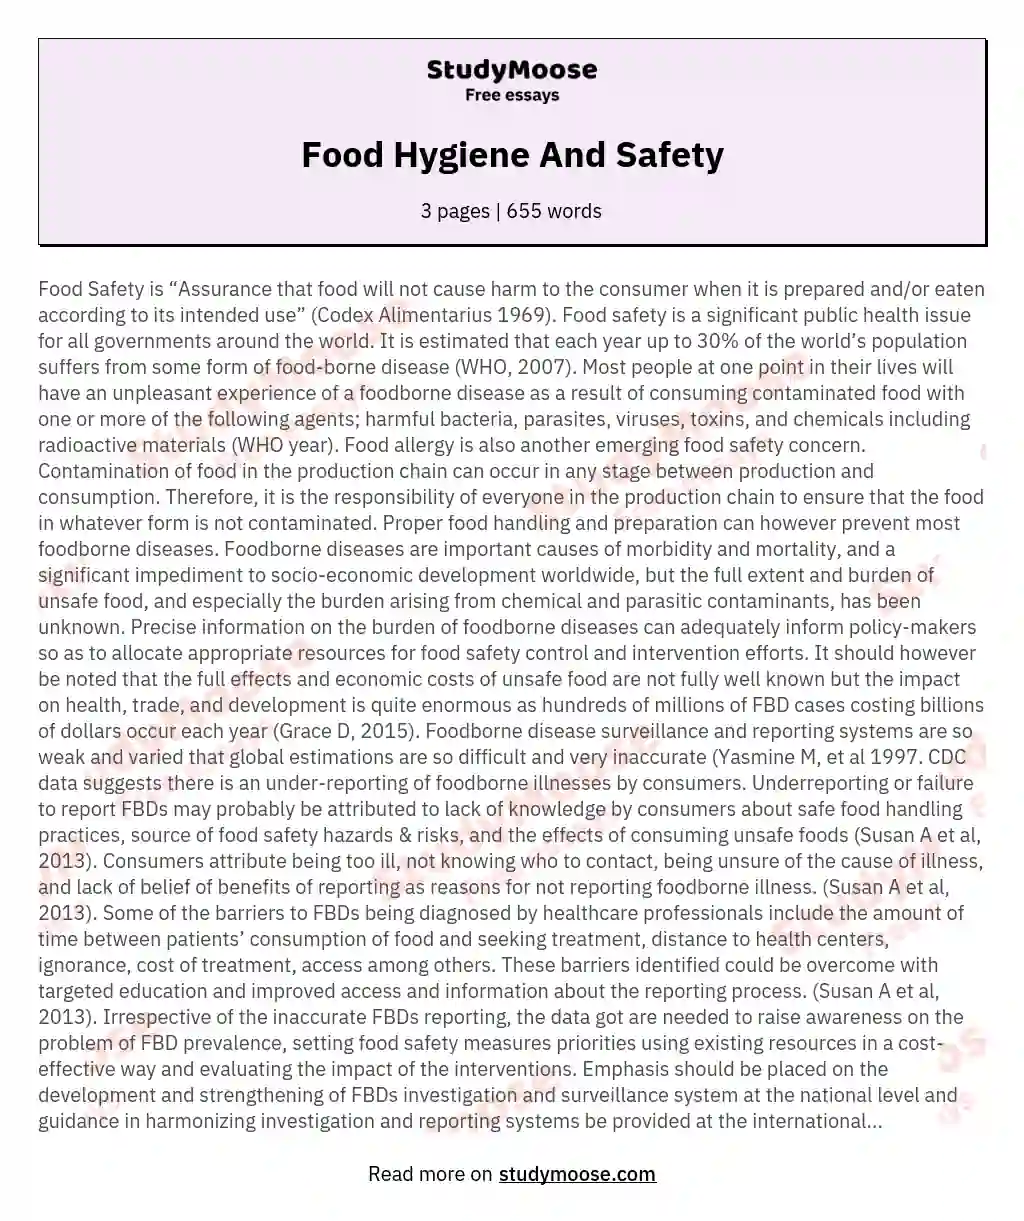 Food Hygiene And Safety essay